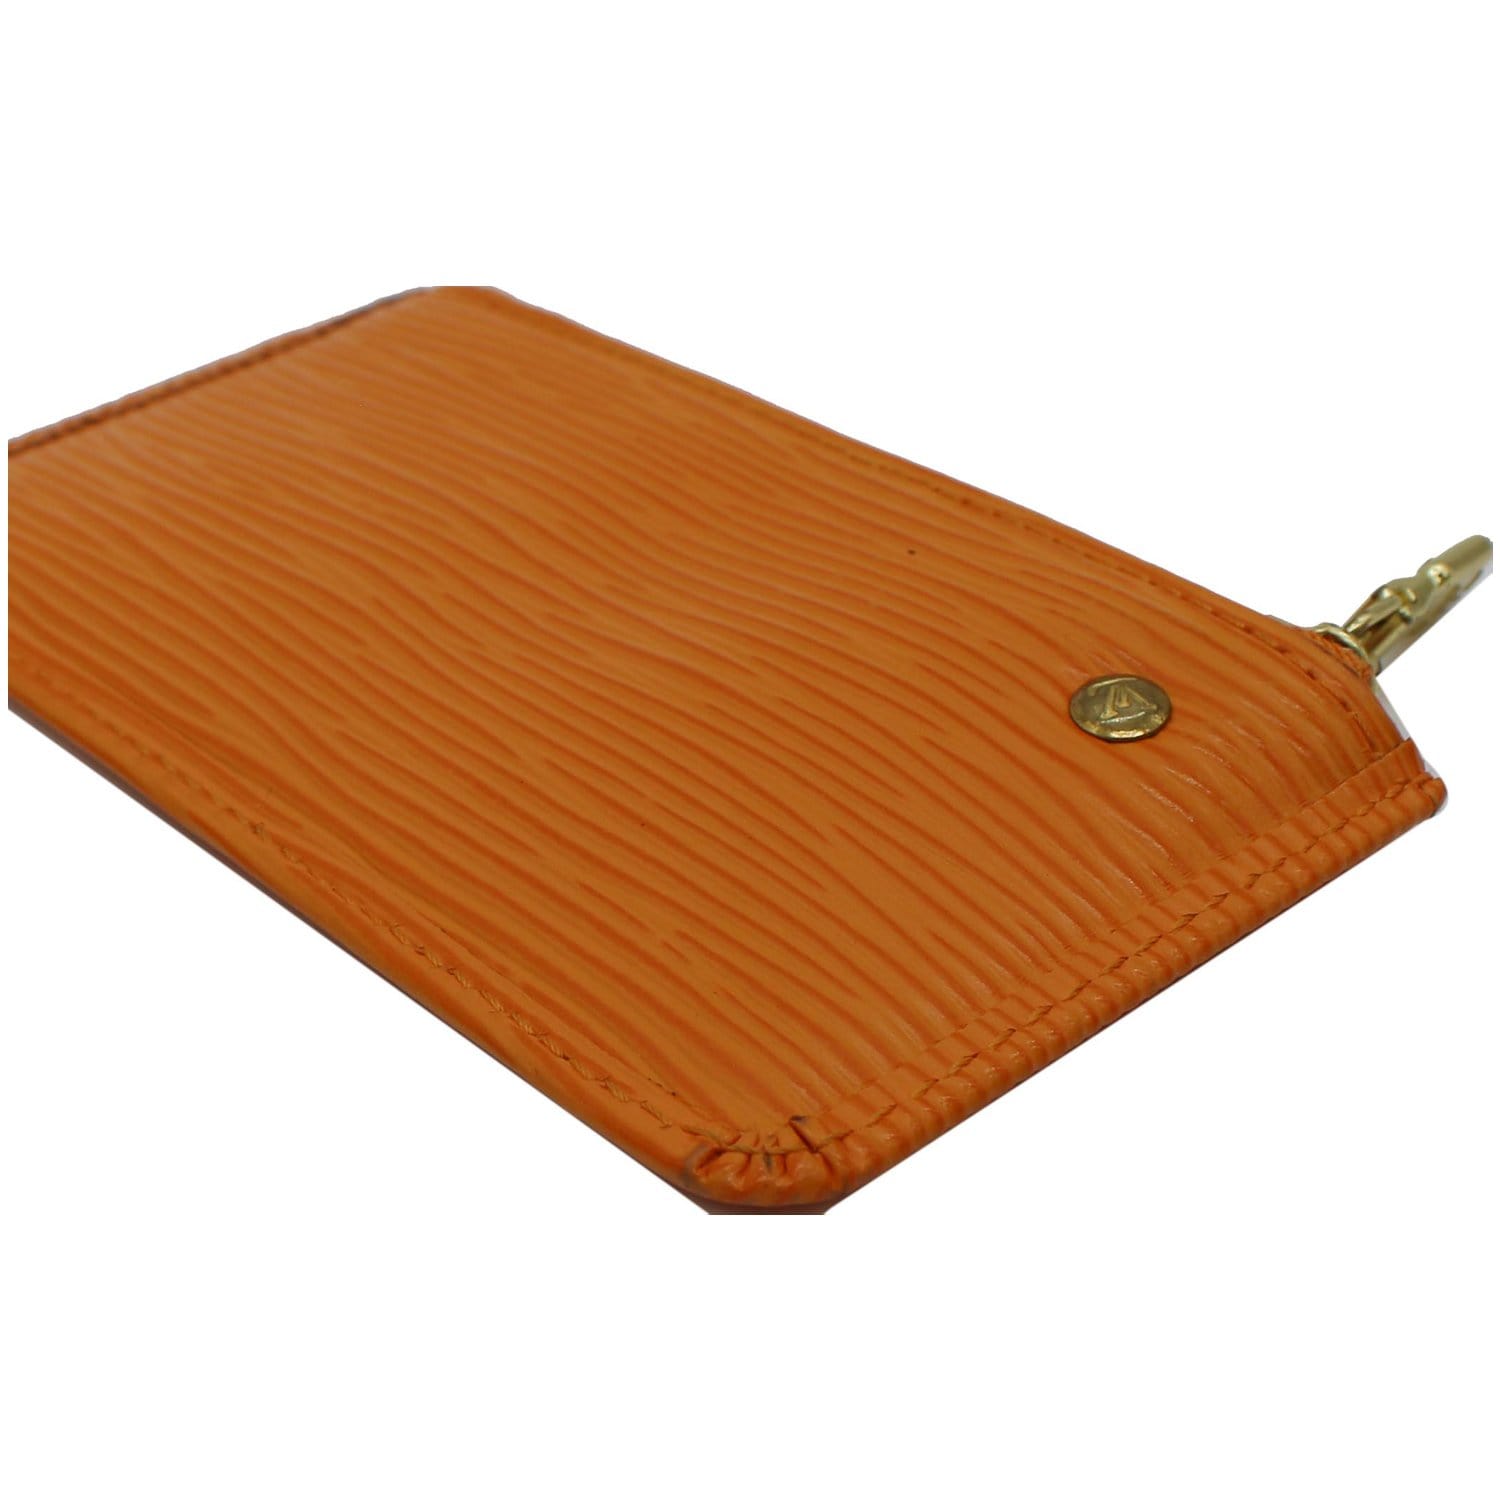 Louis Vuitton Yellow EPI Leather Key Pouch Keychain Pochette Cles s214lv79